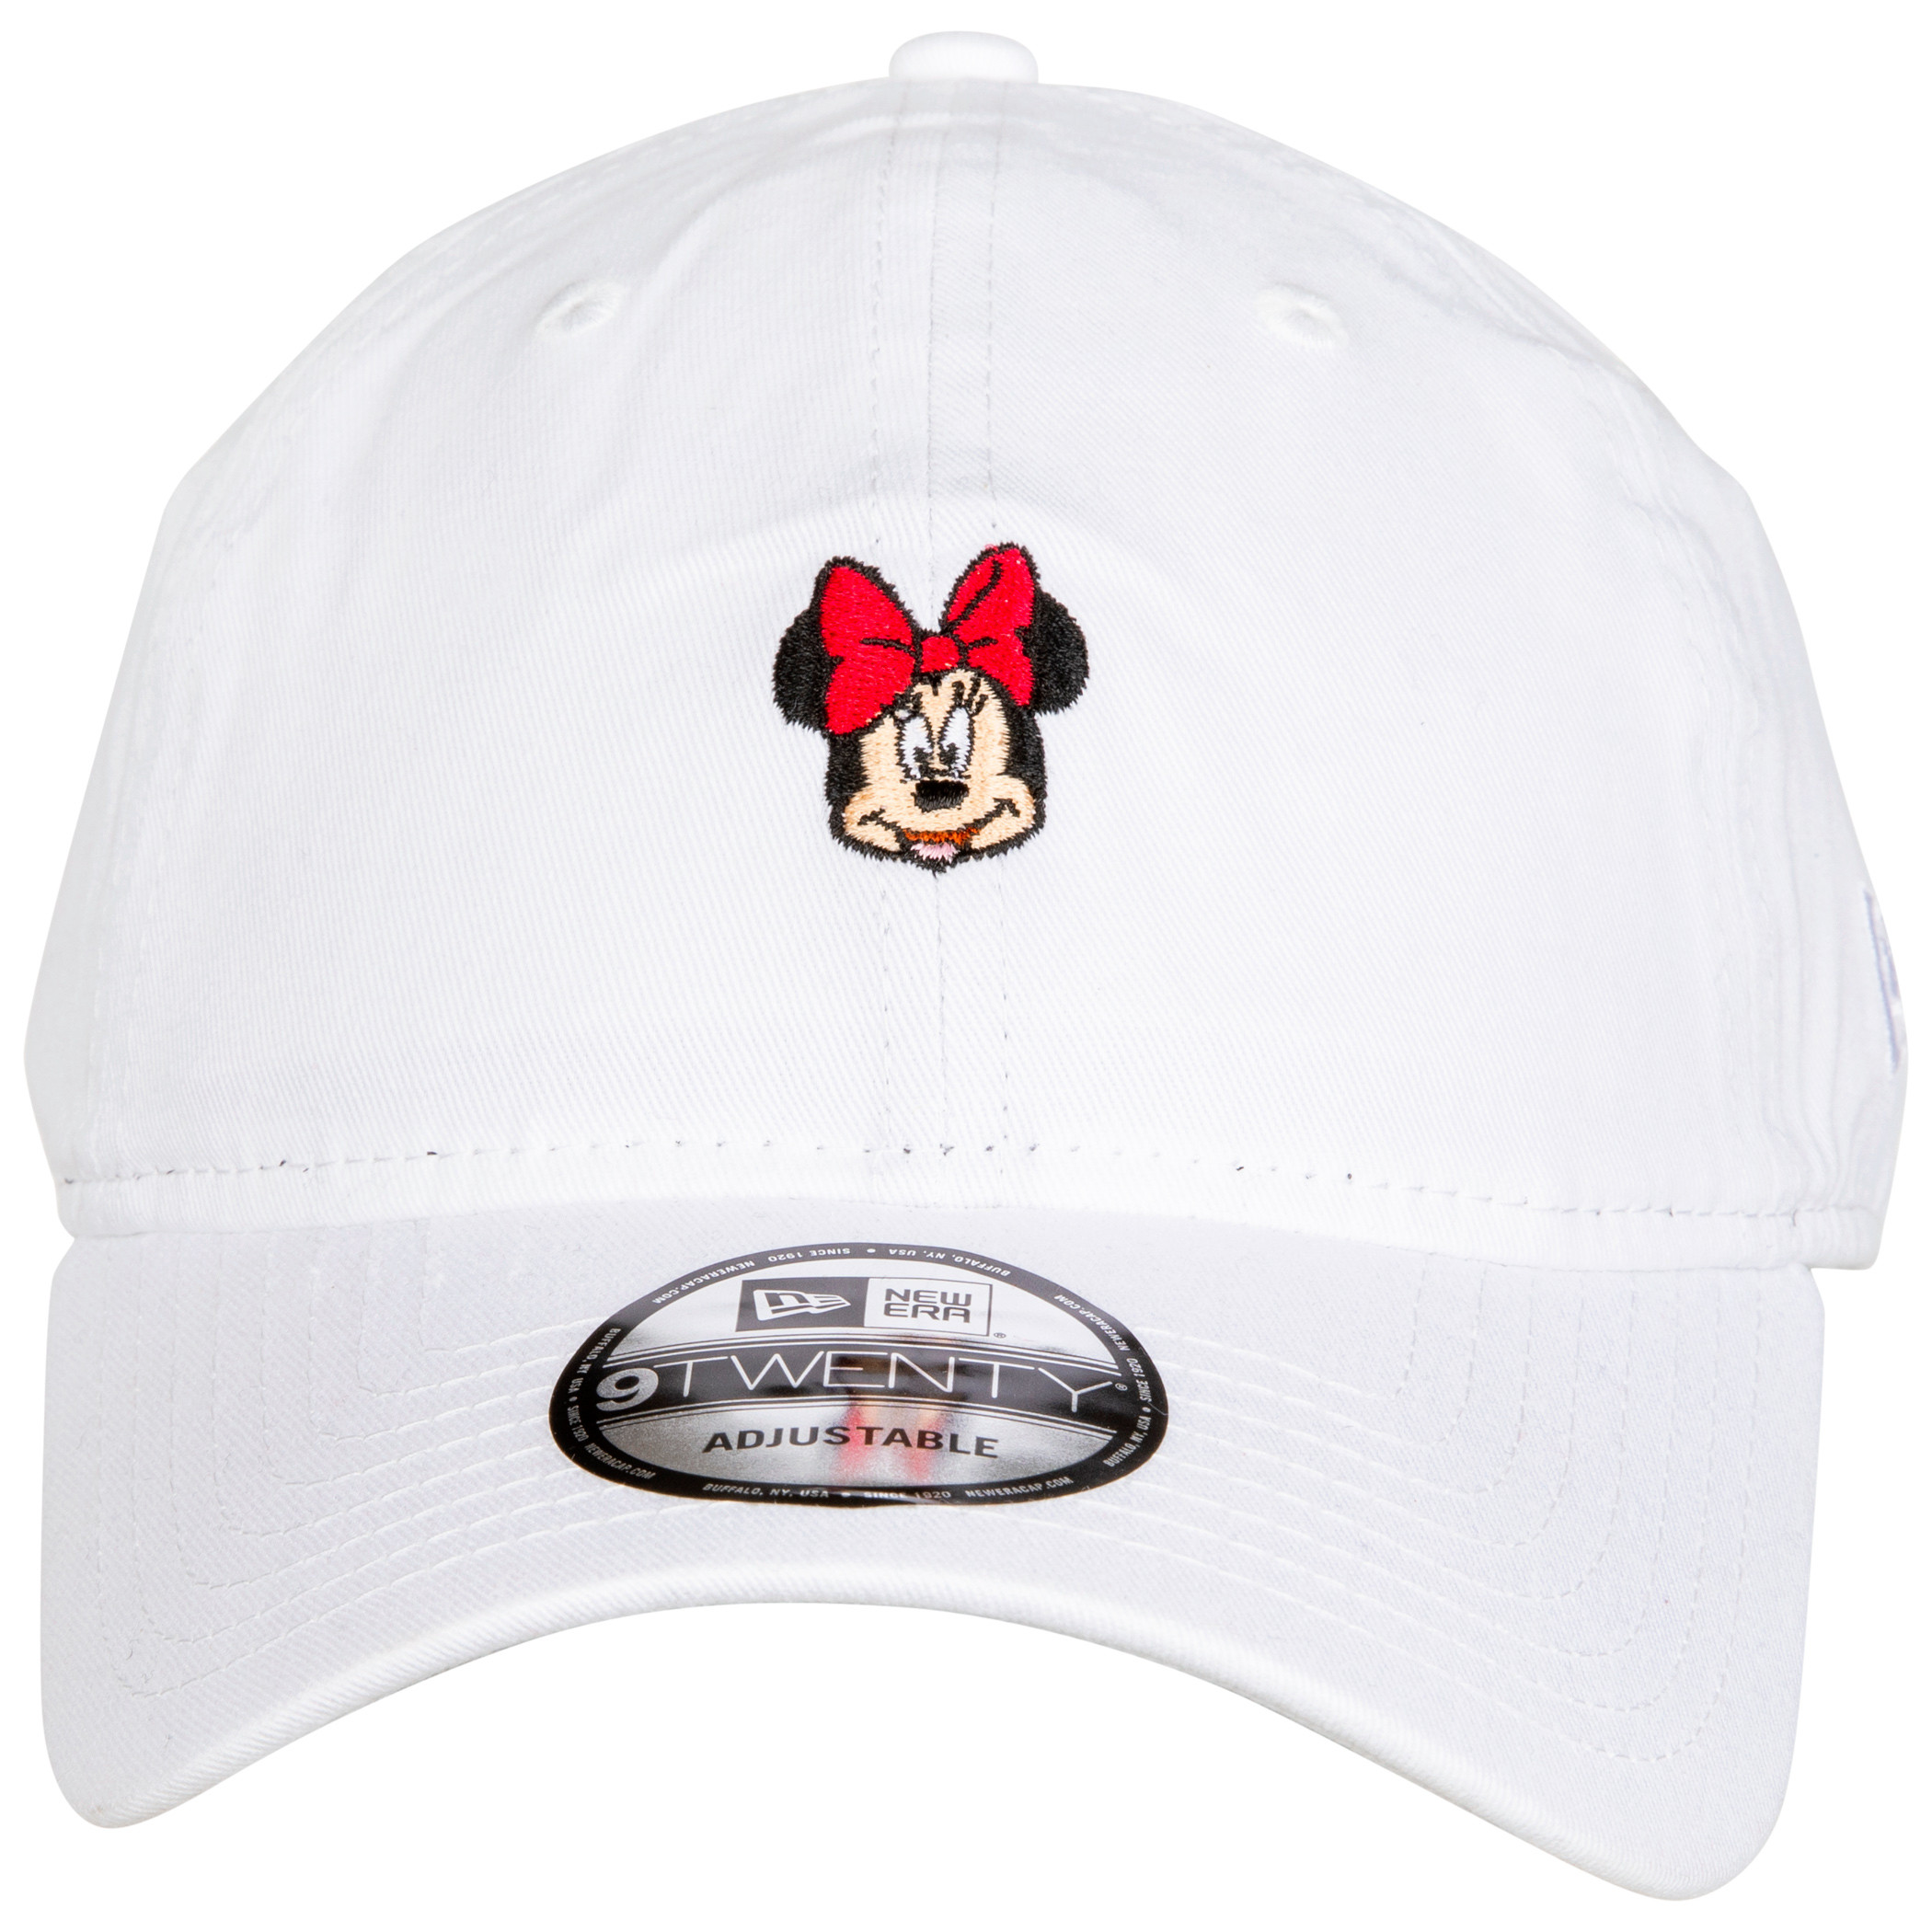 Disney Minnie Mouse Face New Era 9Twenty Adjustable Hat